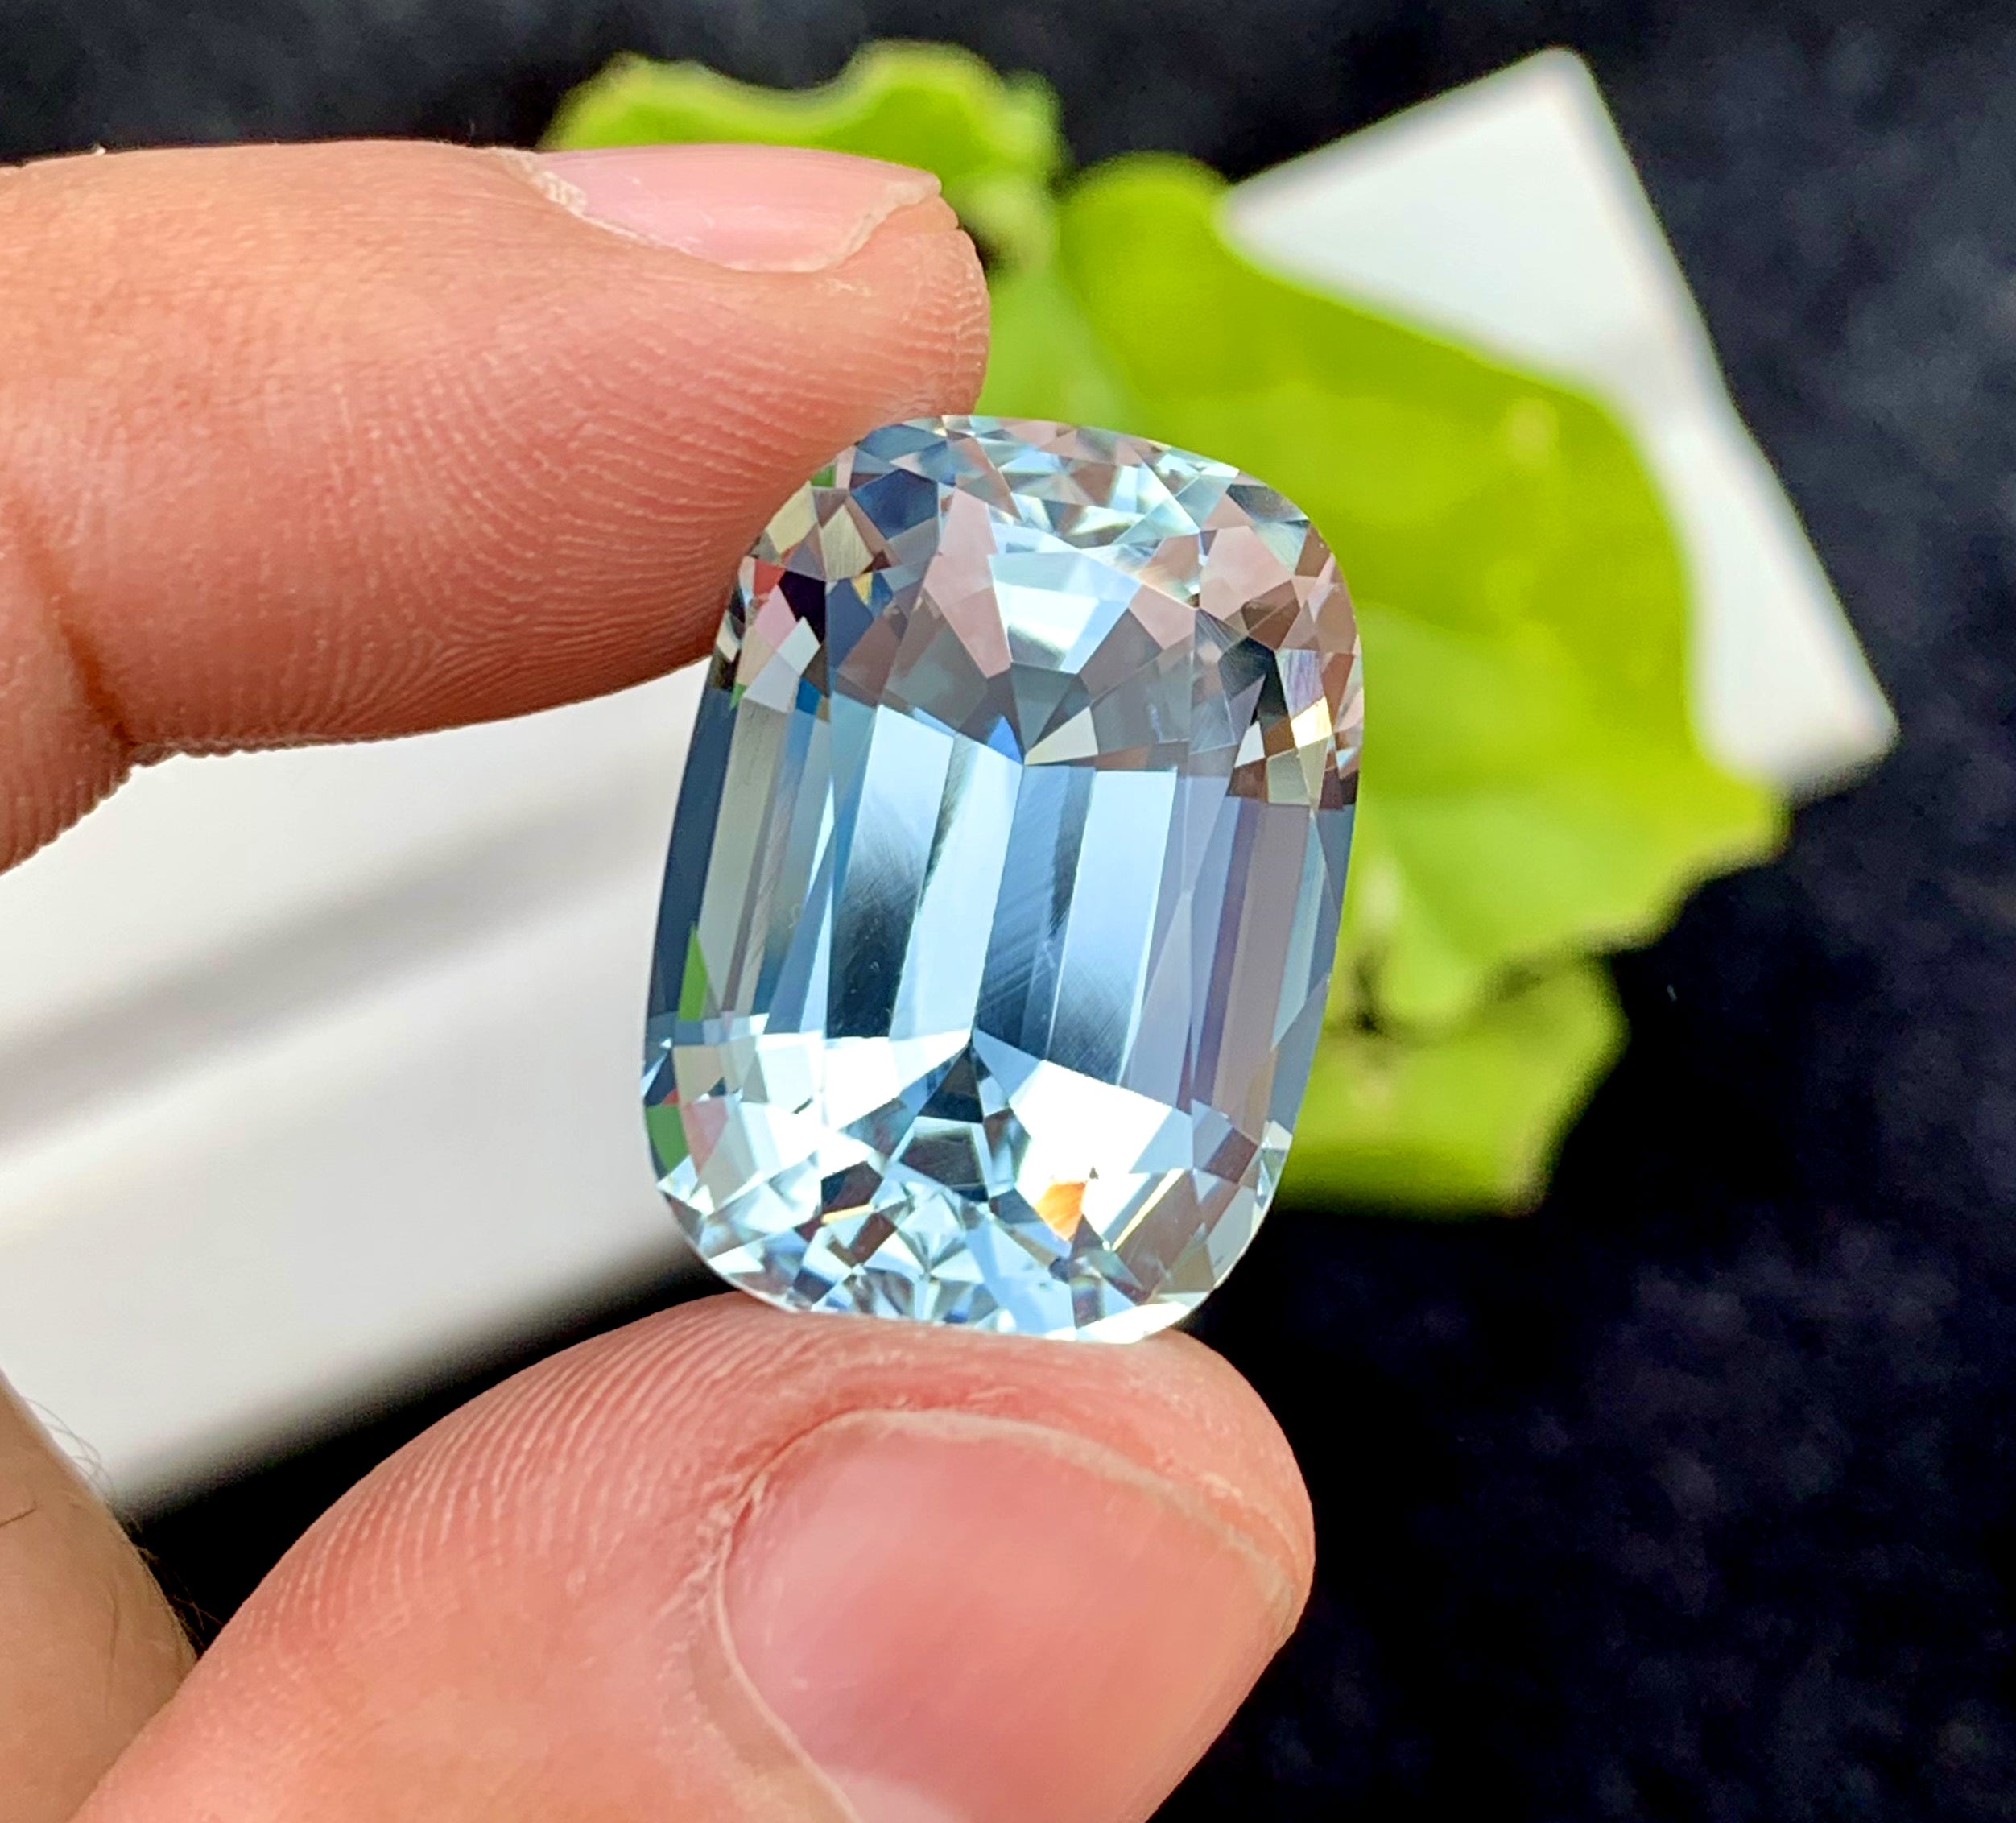 Cusshion Cut Natural Aquamarne Gemstone, Loose Gemstone, Aqua Faceted Cut Stone, Gemstone Jewelry - 25.85 CT